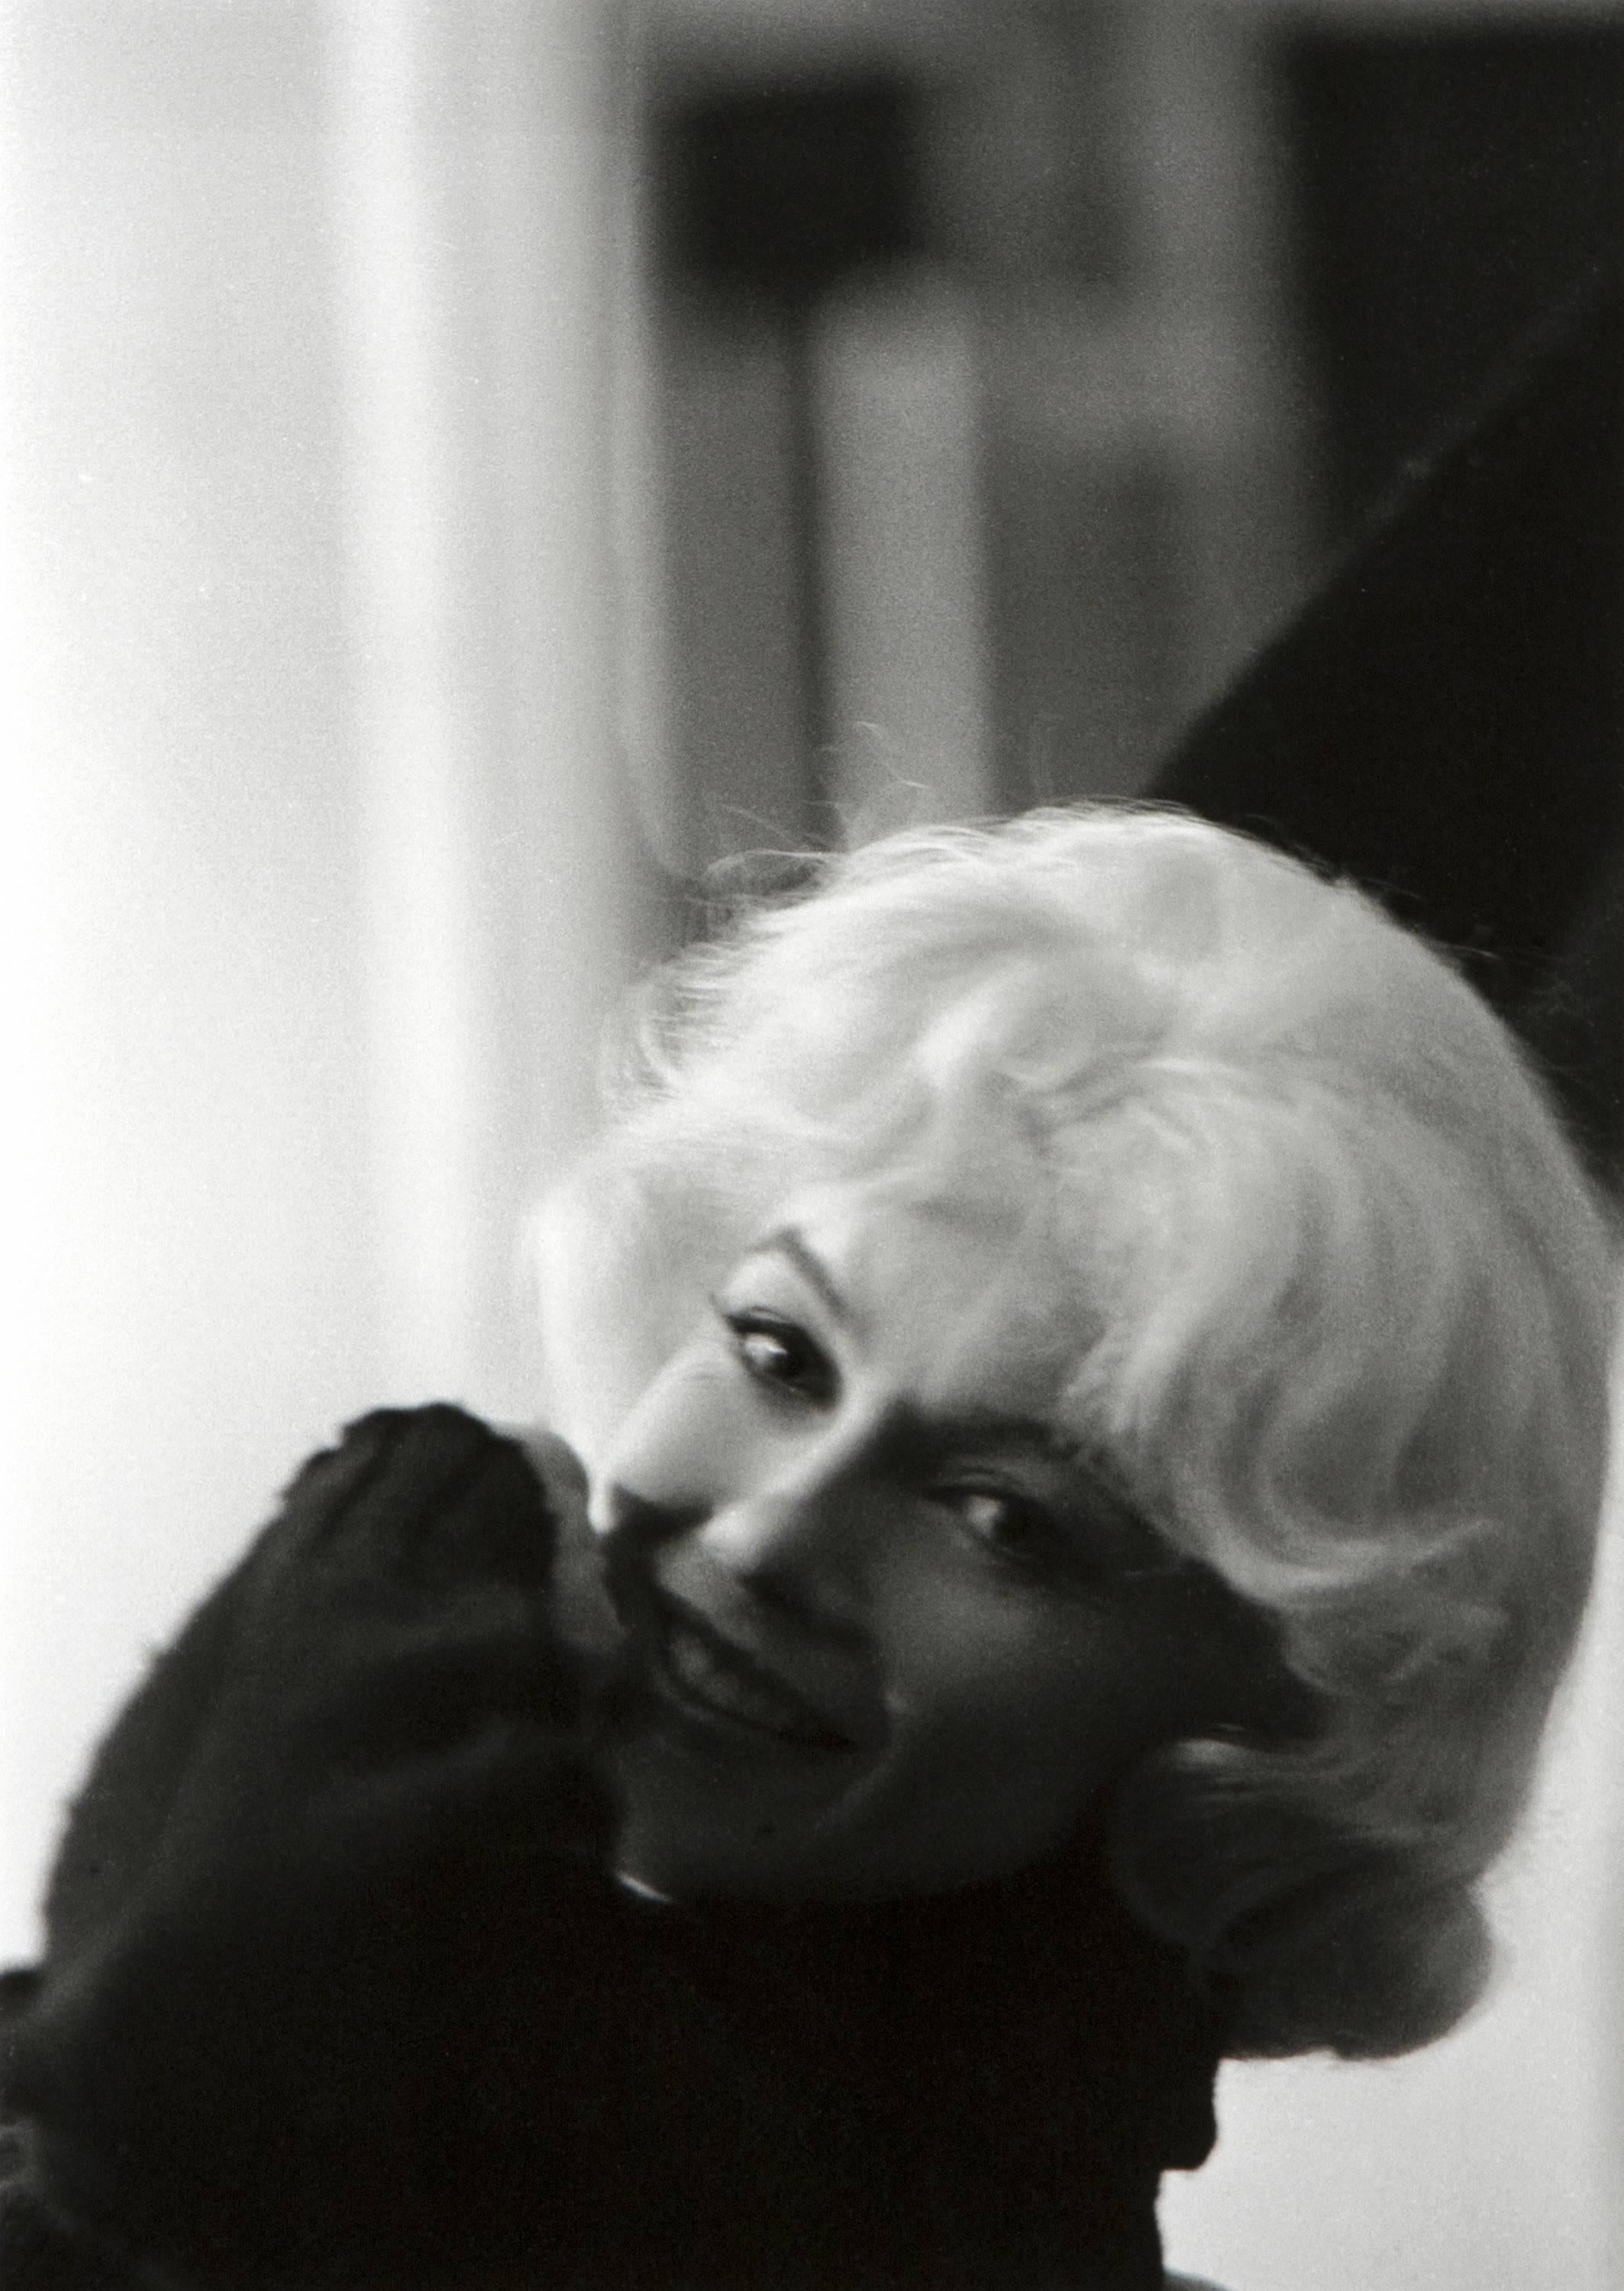 Portrait Photograph Lawrence Schiller - « Let's Make Love », Marilyn Monroe